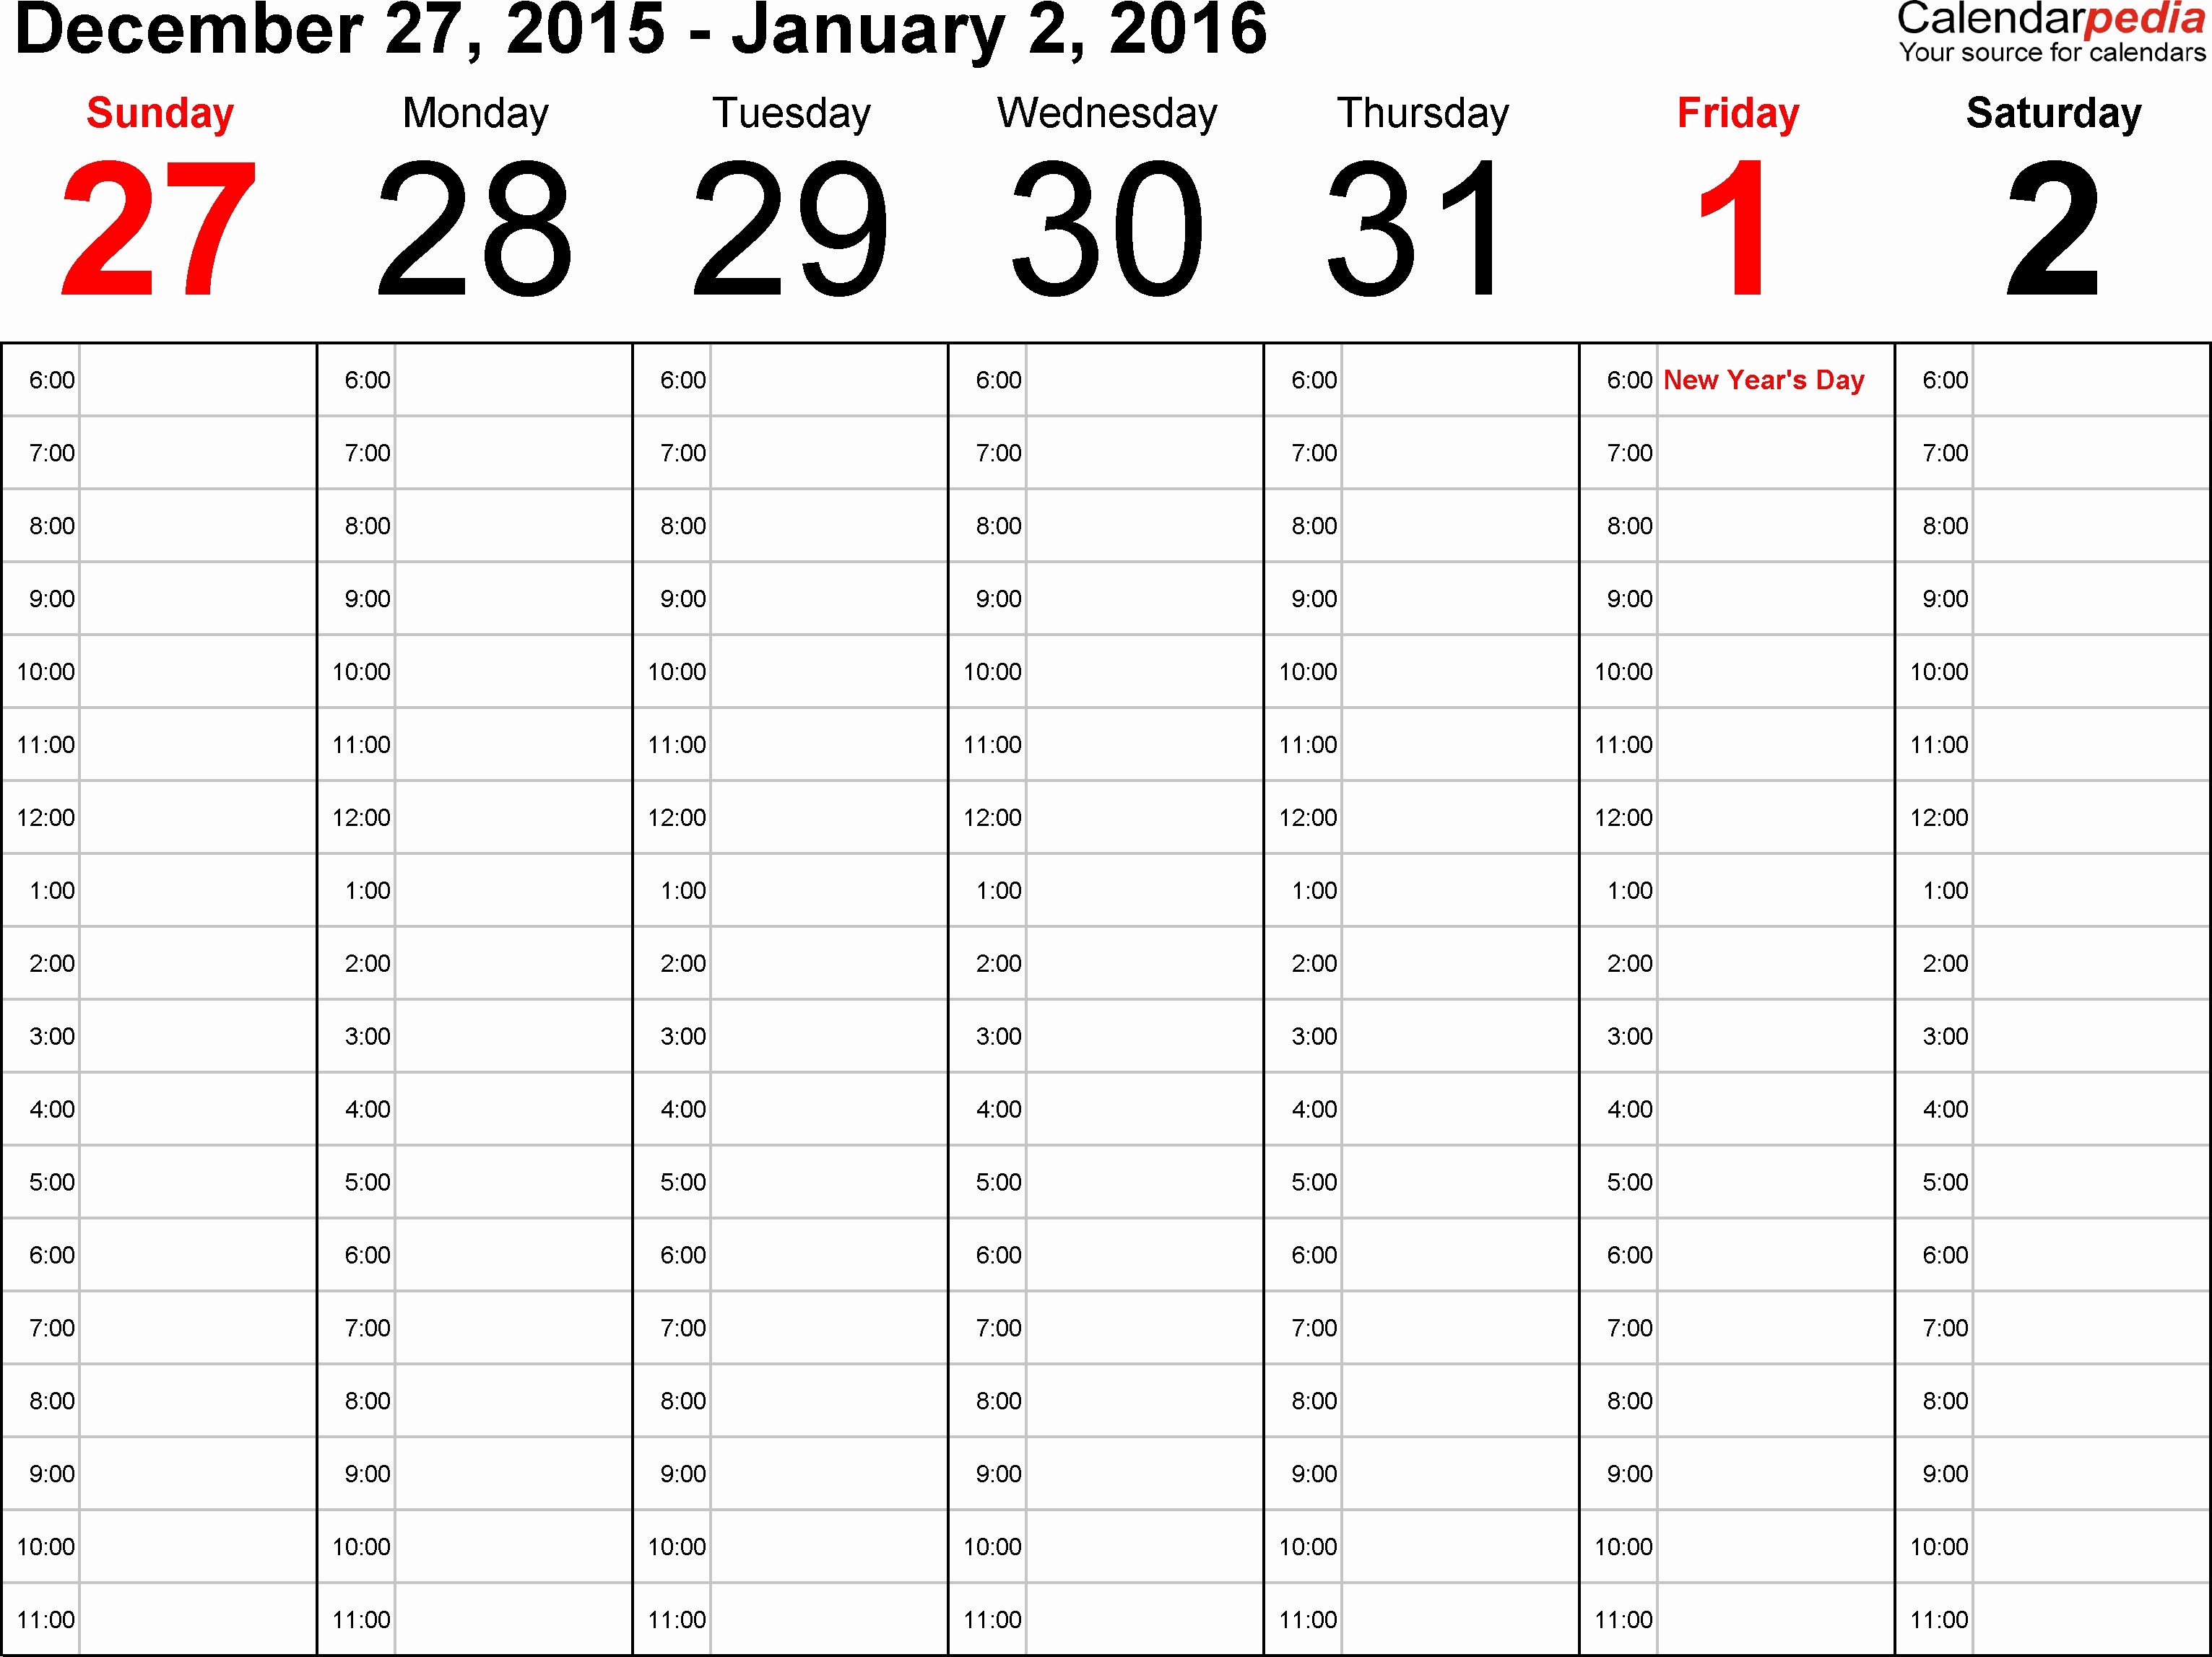 52 Week Savings Plan Excel Awesome Weekly Calendar 2016 For 12 Document